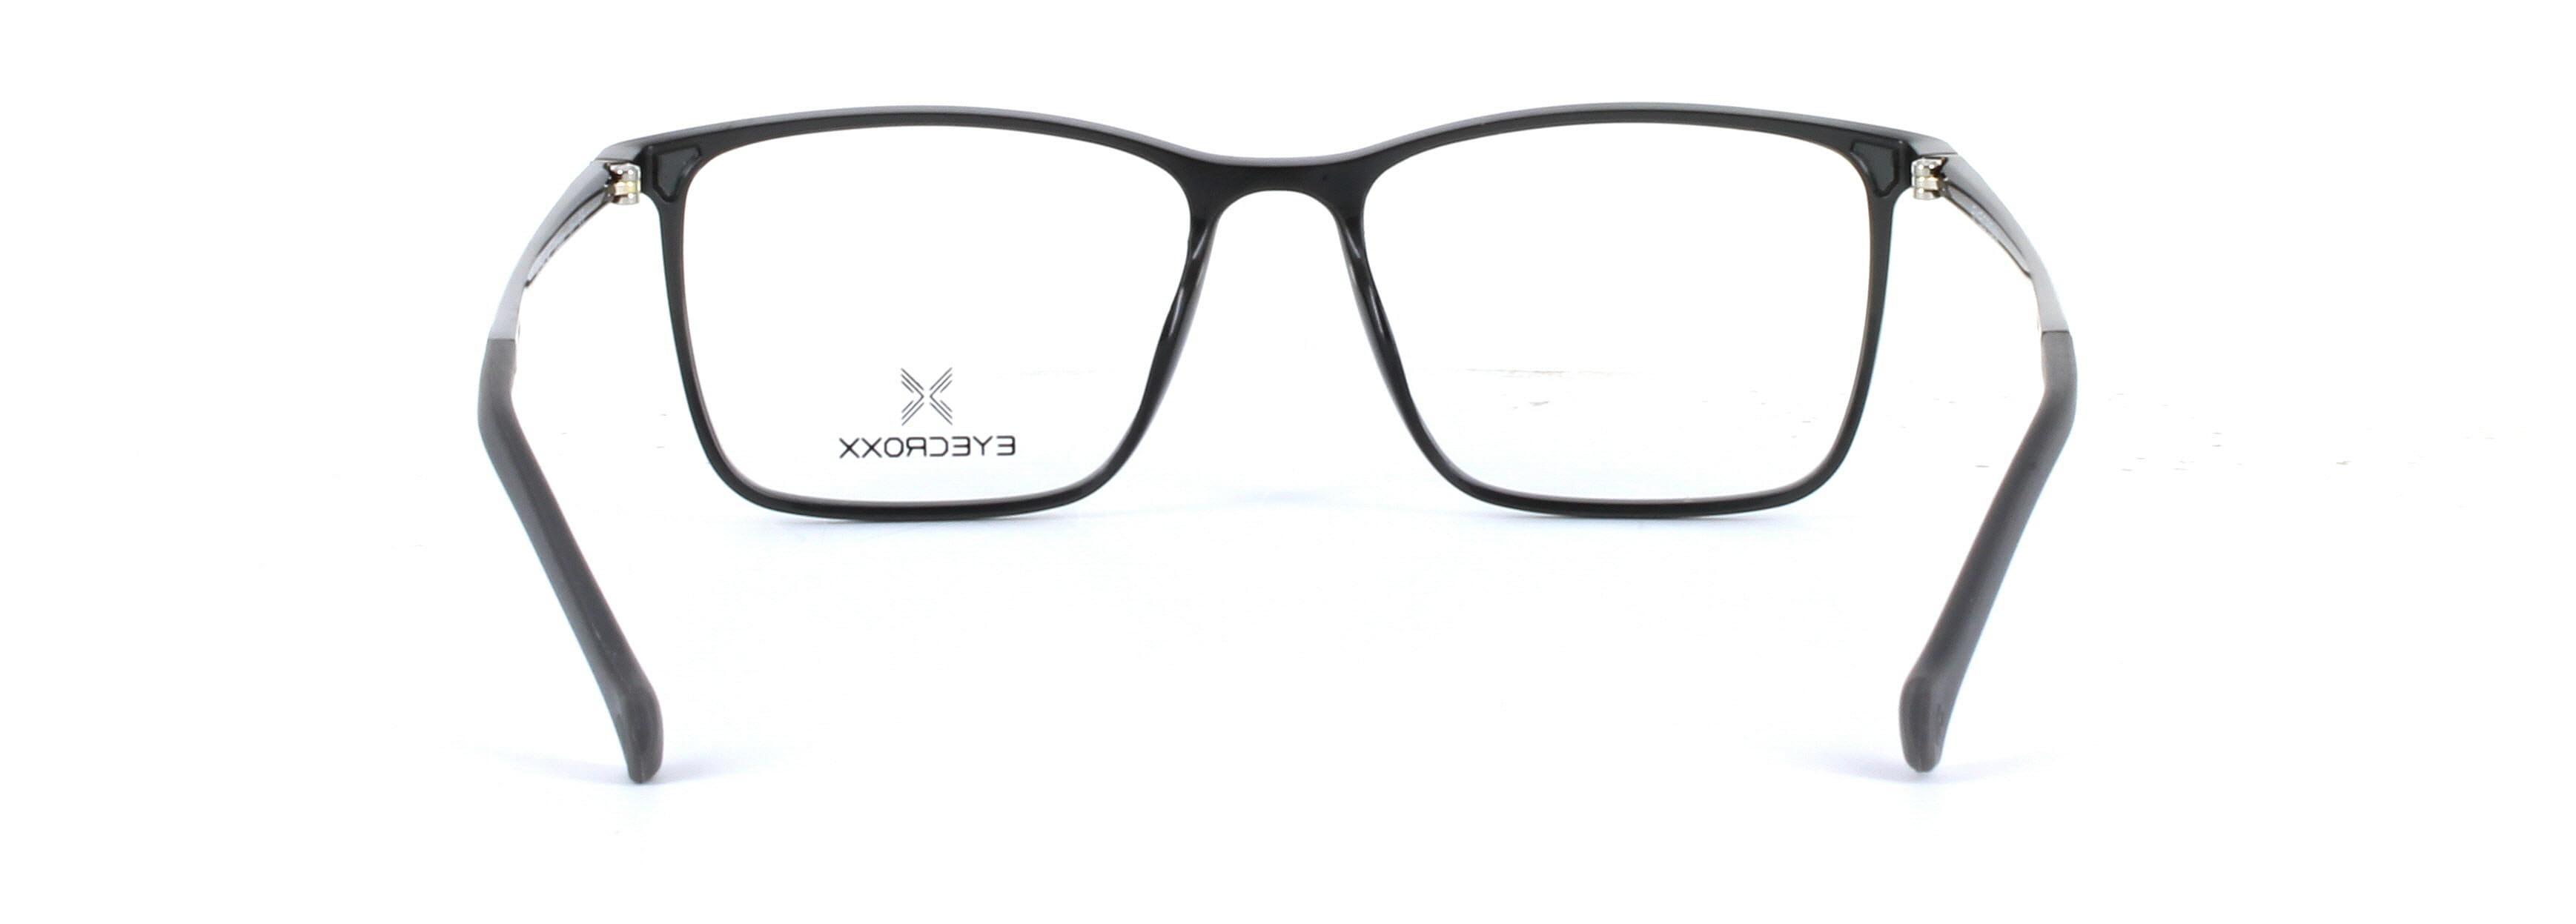 Eyecroxx 588 Grey Full Rim Plastic Glasses - Image View 3